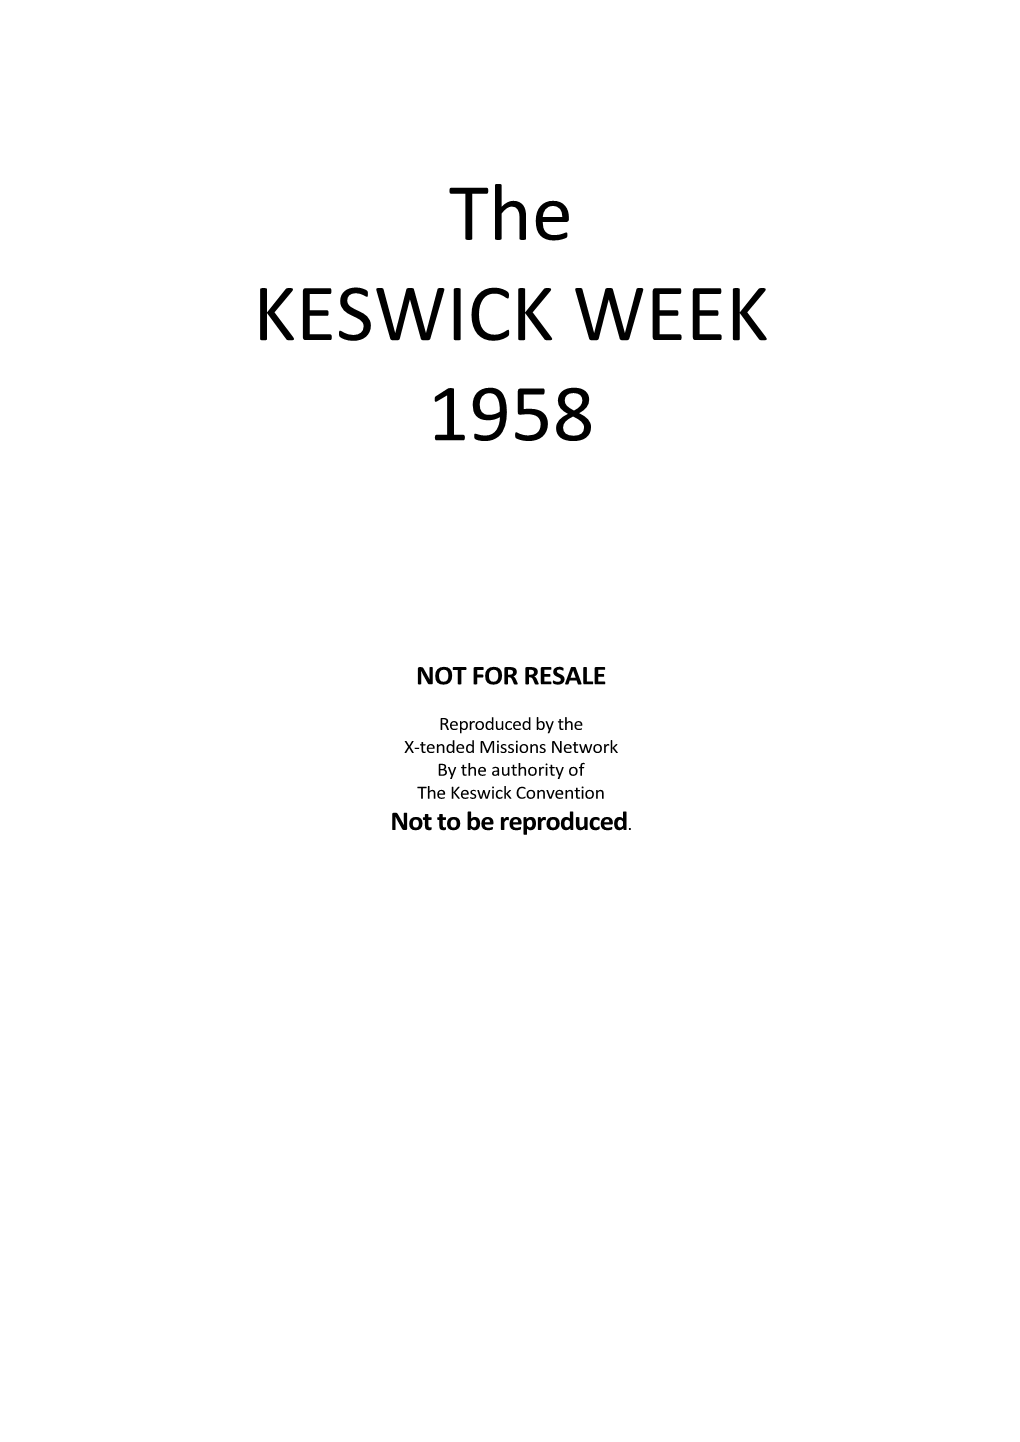 The KESWICK WEEK 1958